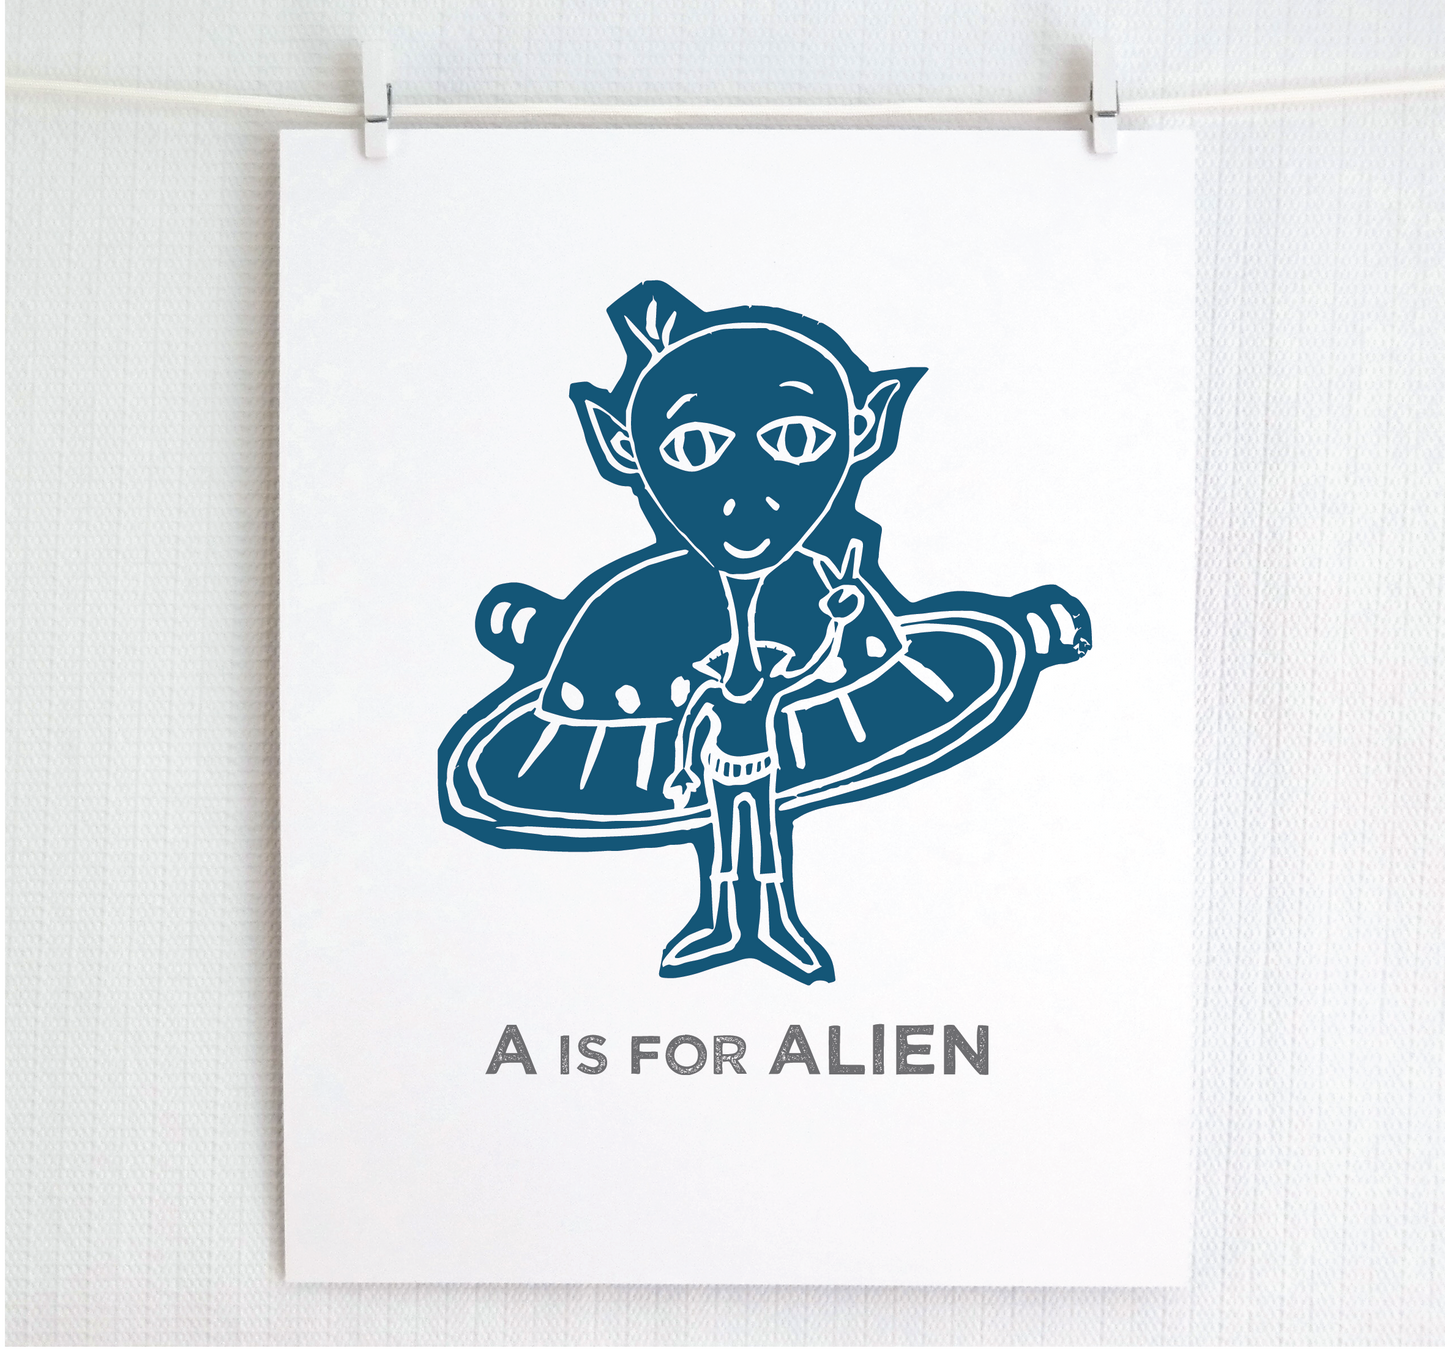 A is for Alien